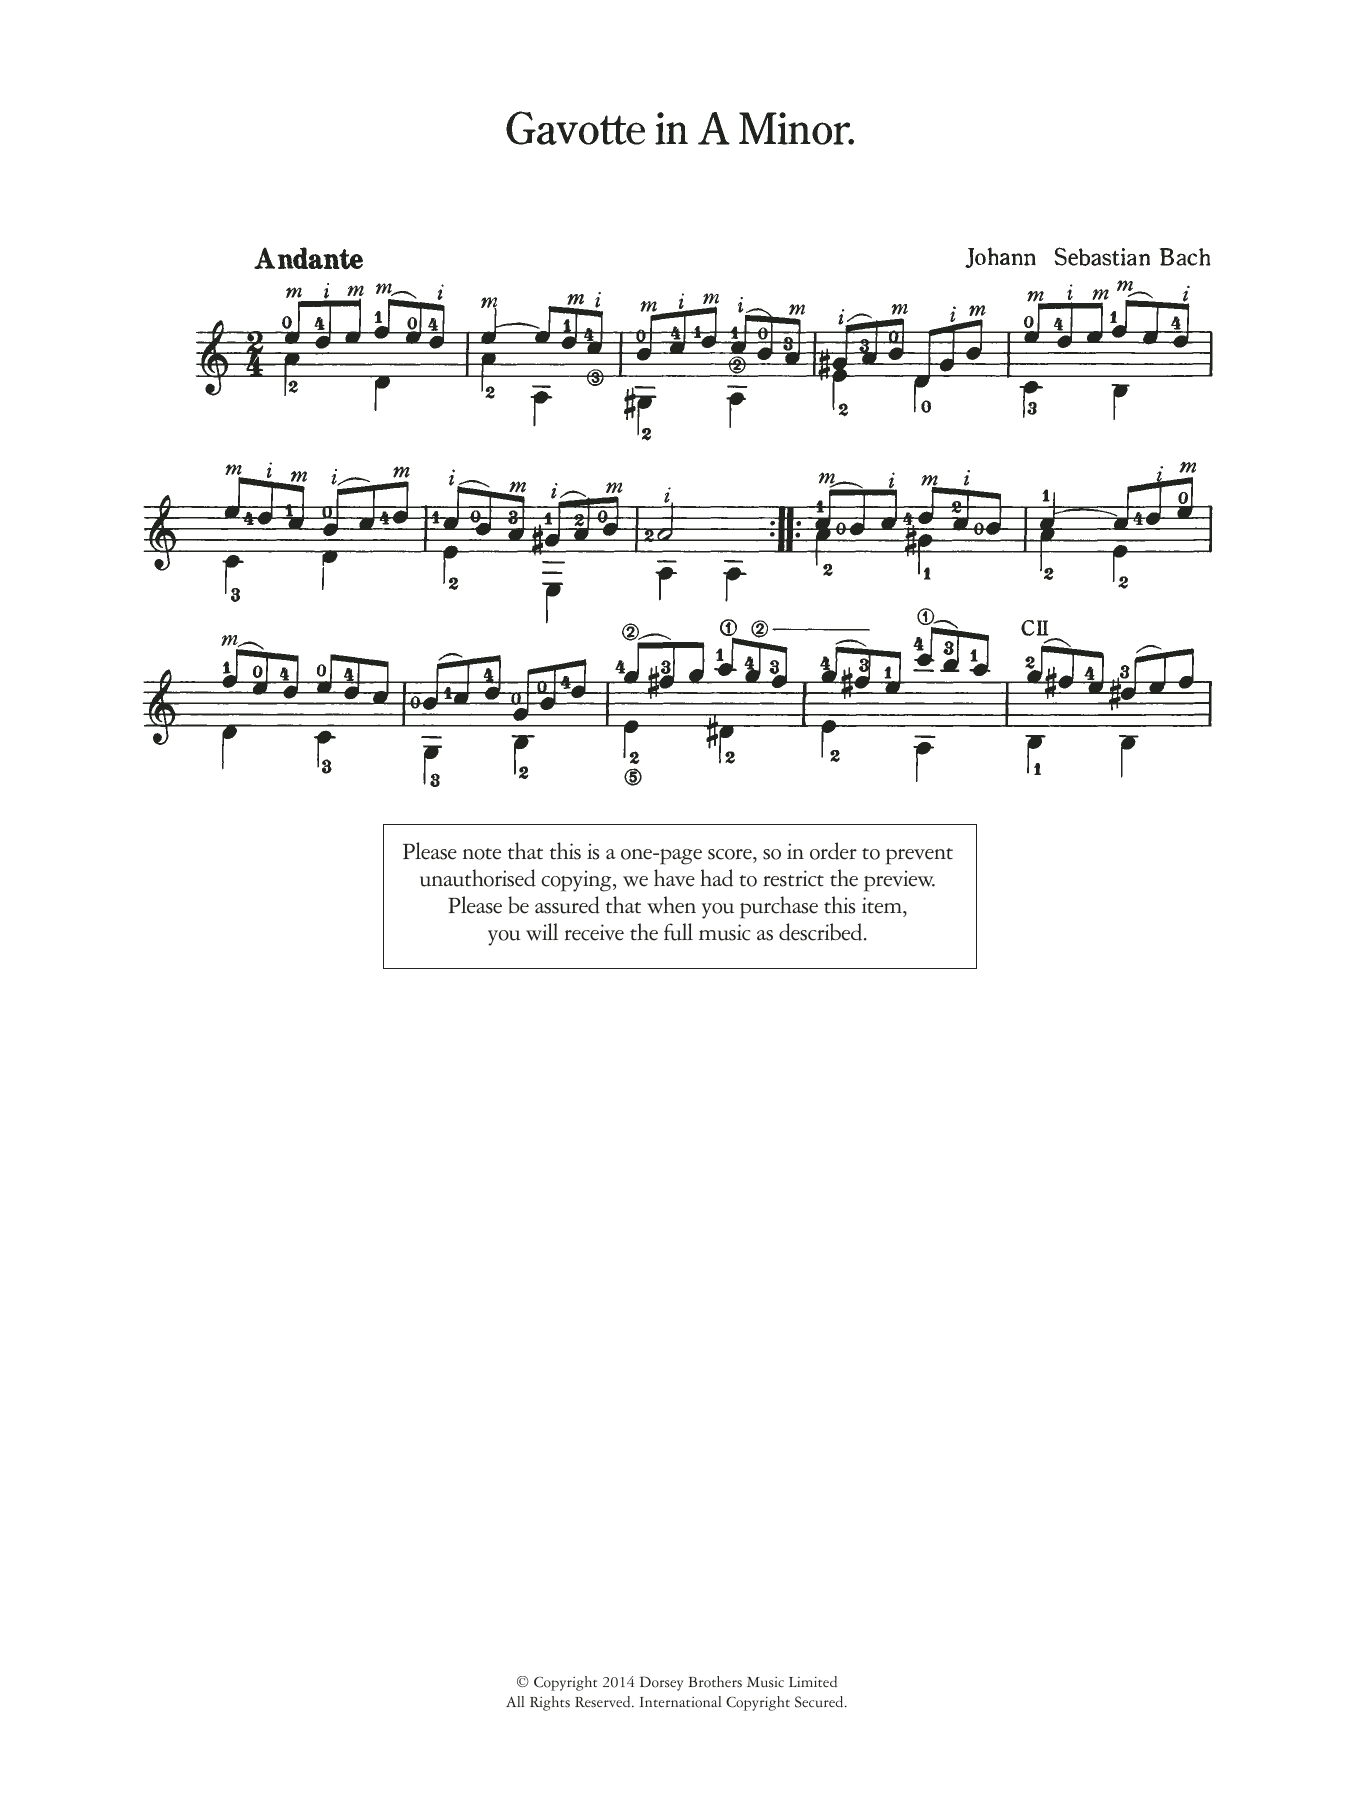 Johann Sebastian Bach Gavotte in A Minor Sheet Music Notes & Chords for Guitar - Download or Print PDF